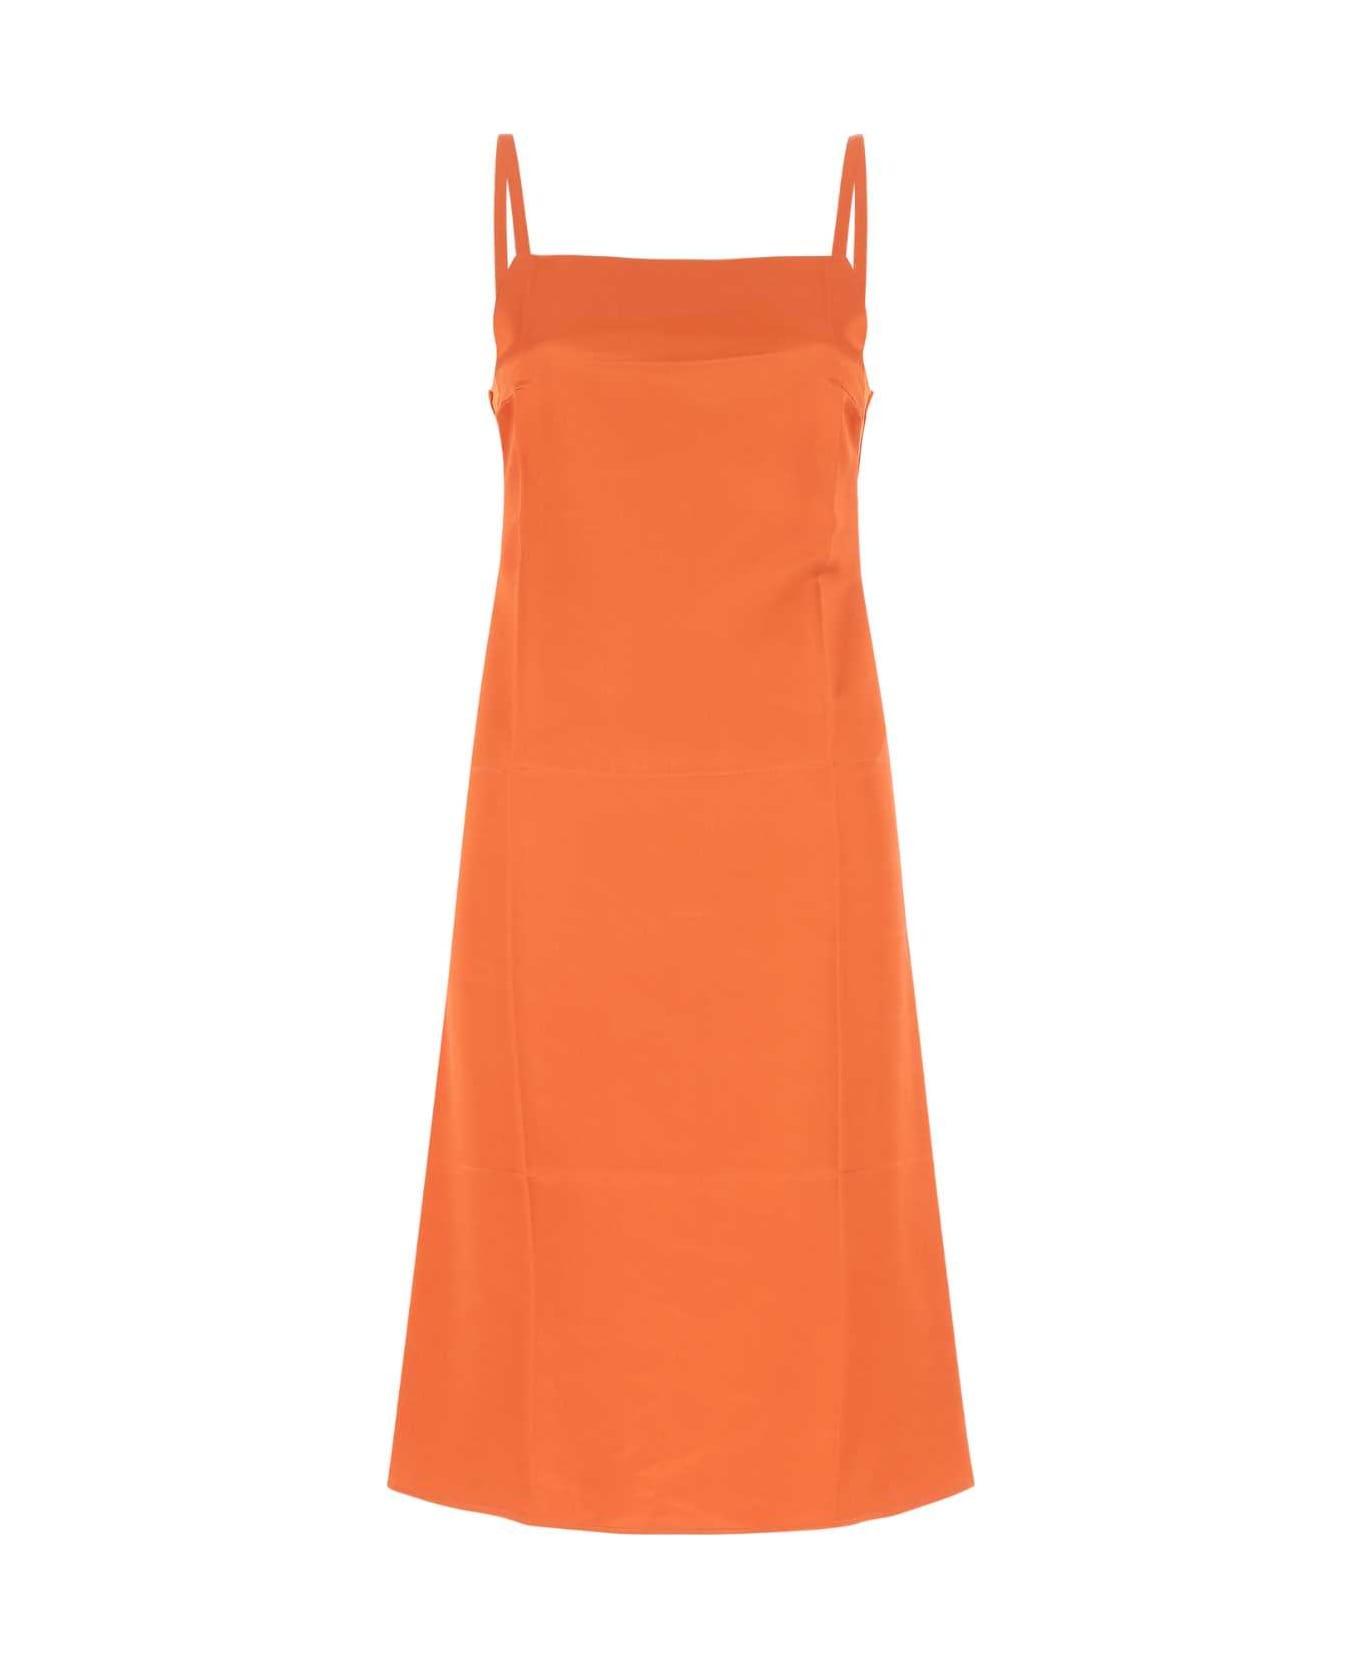 Loewe Orange Satin Dress - BRIGHTORANGE